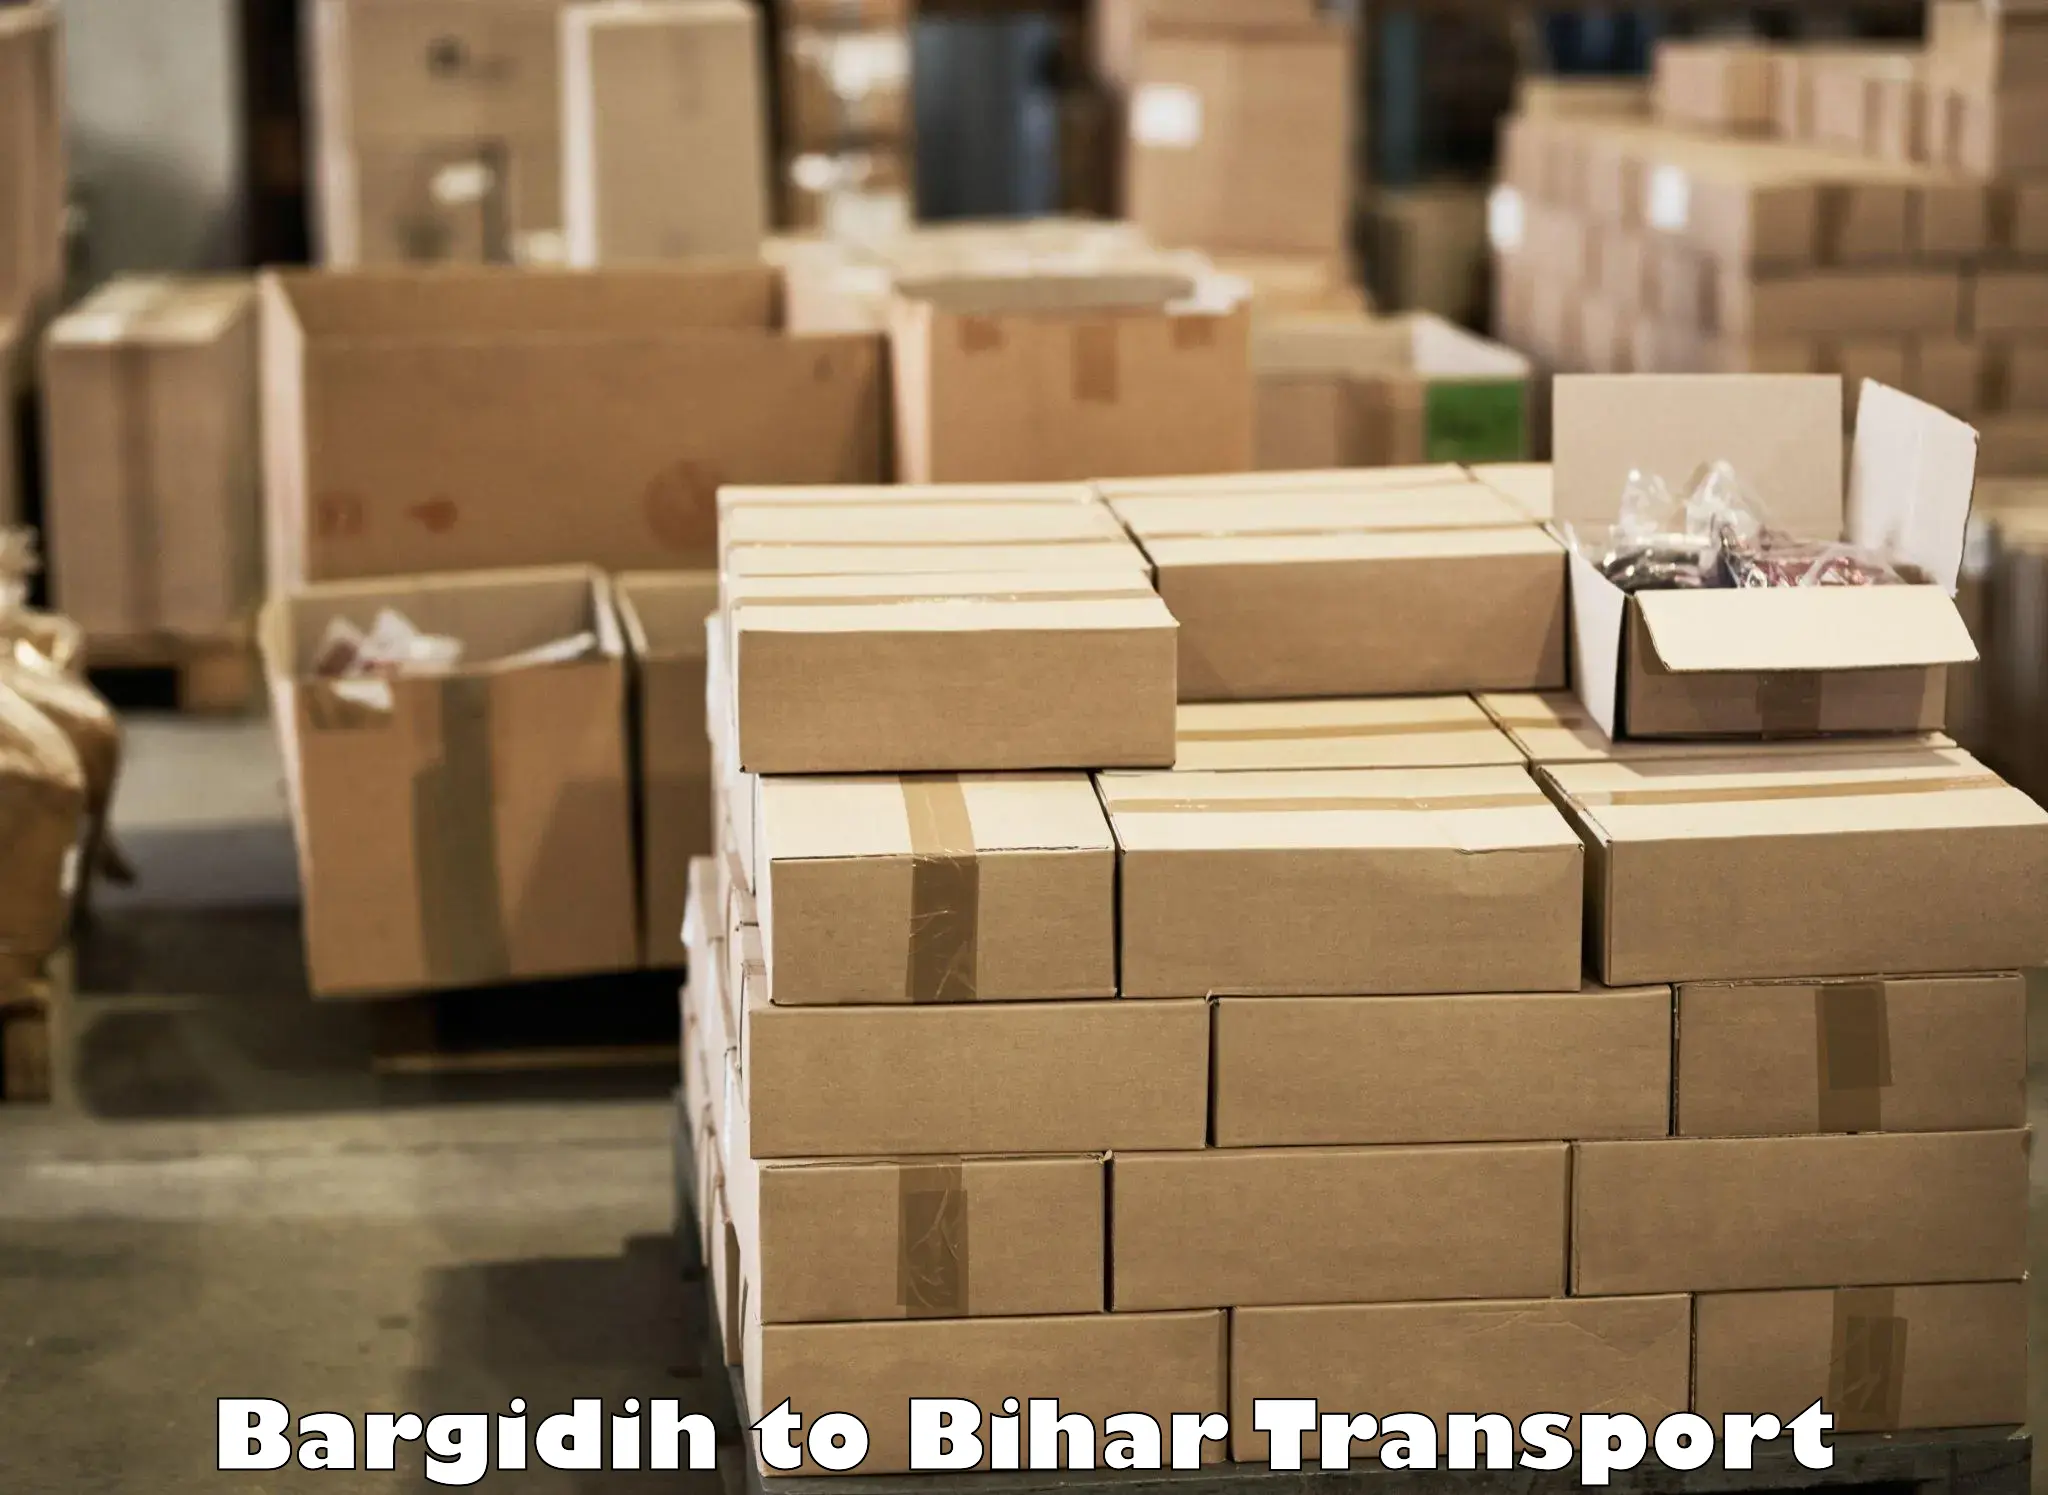 Express transport services Bargidih to Mohammadpur